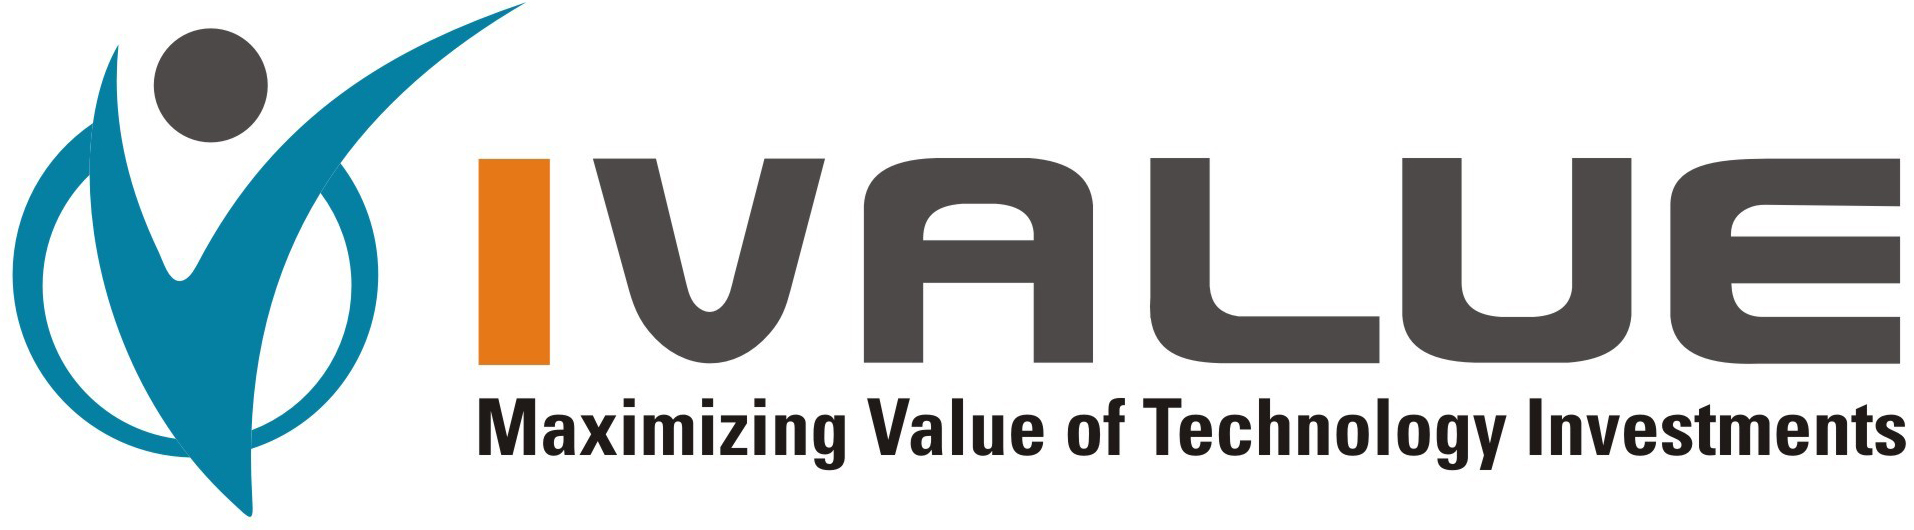 iValue logo